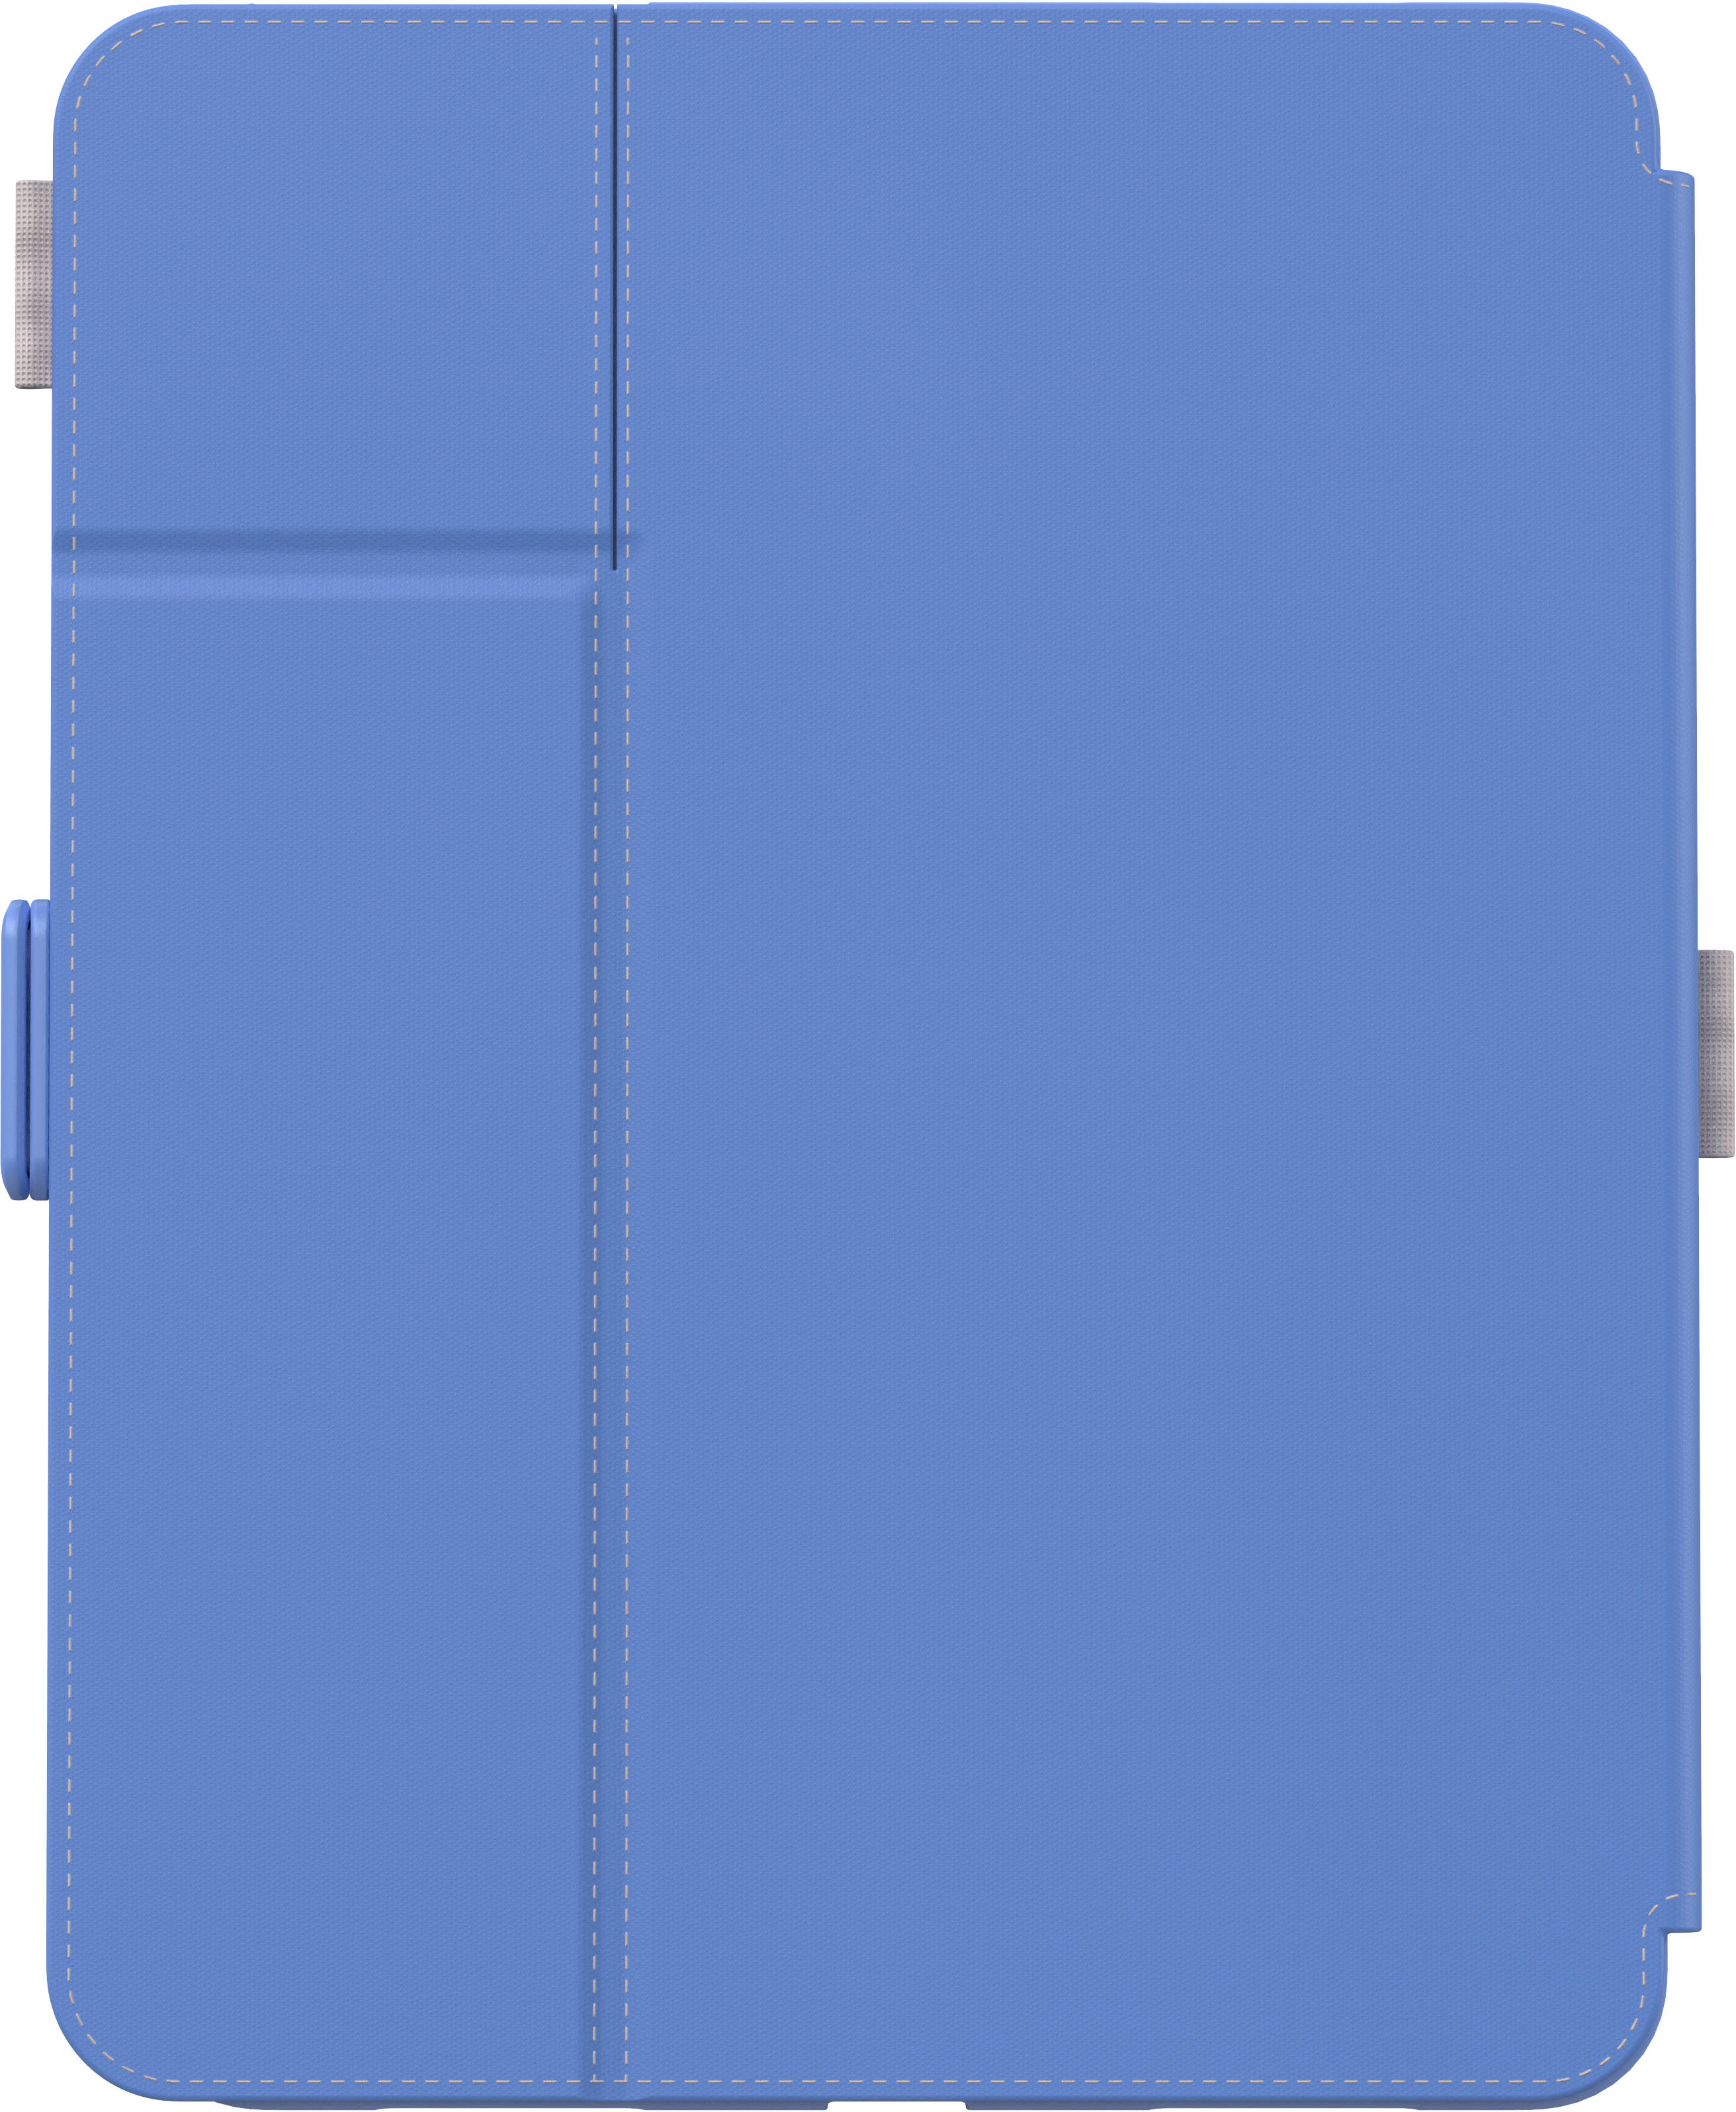 Speck Balance Folio iPad Mini (2021) Cases Verry Berry Red/Slate Grey